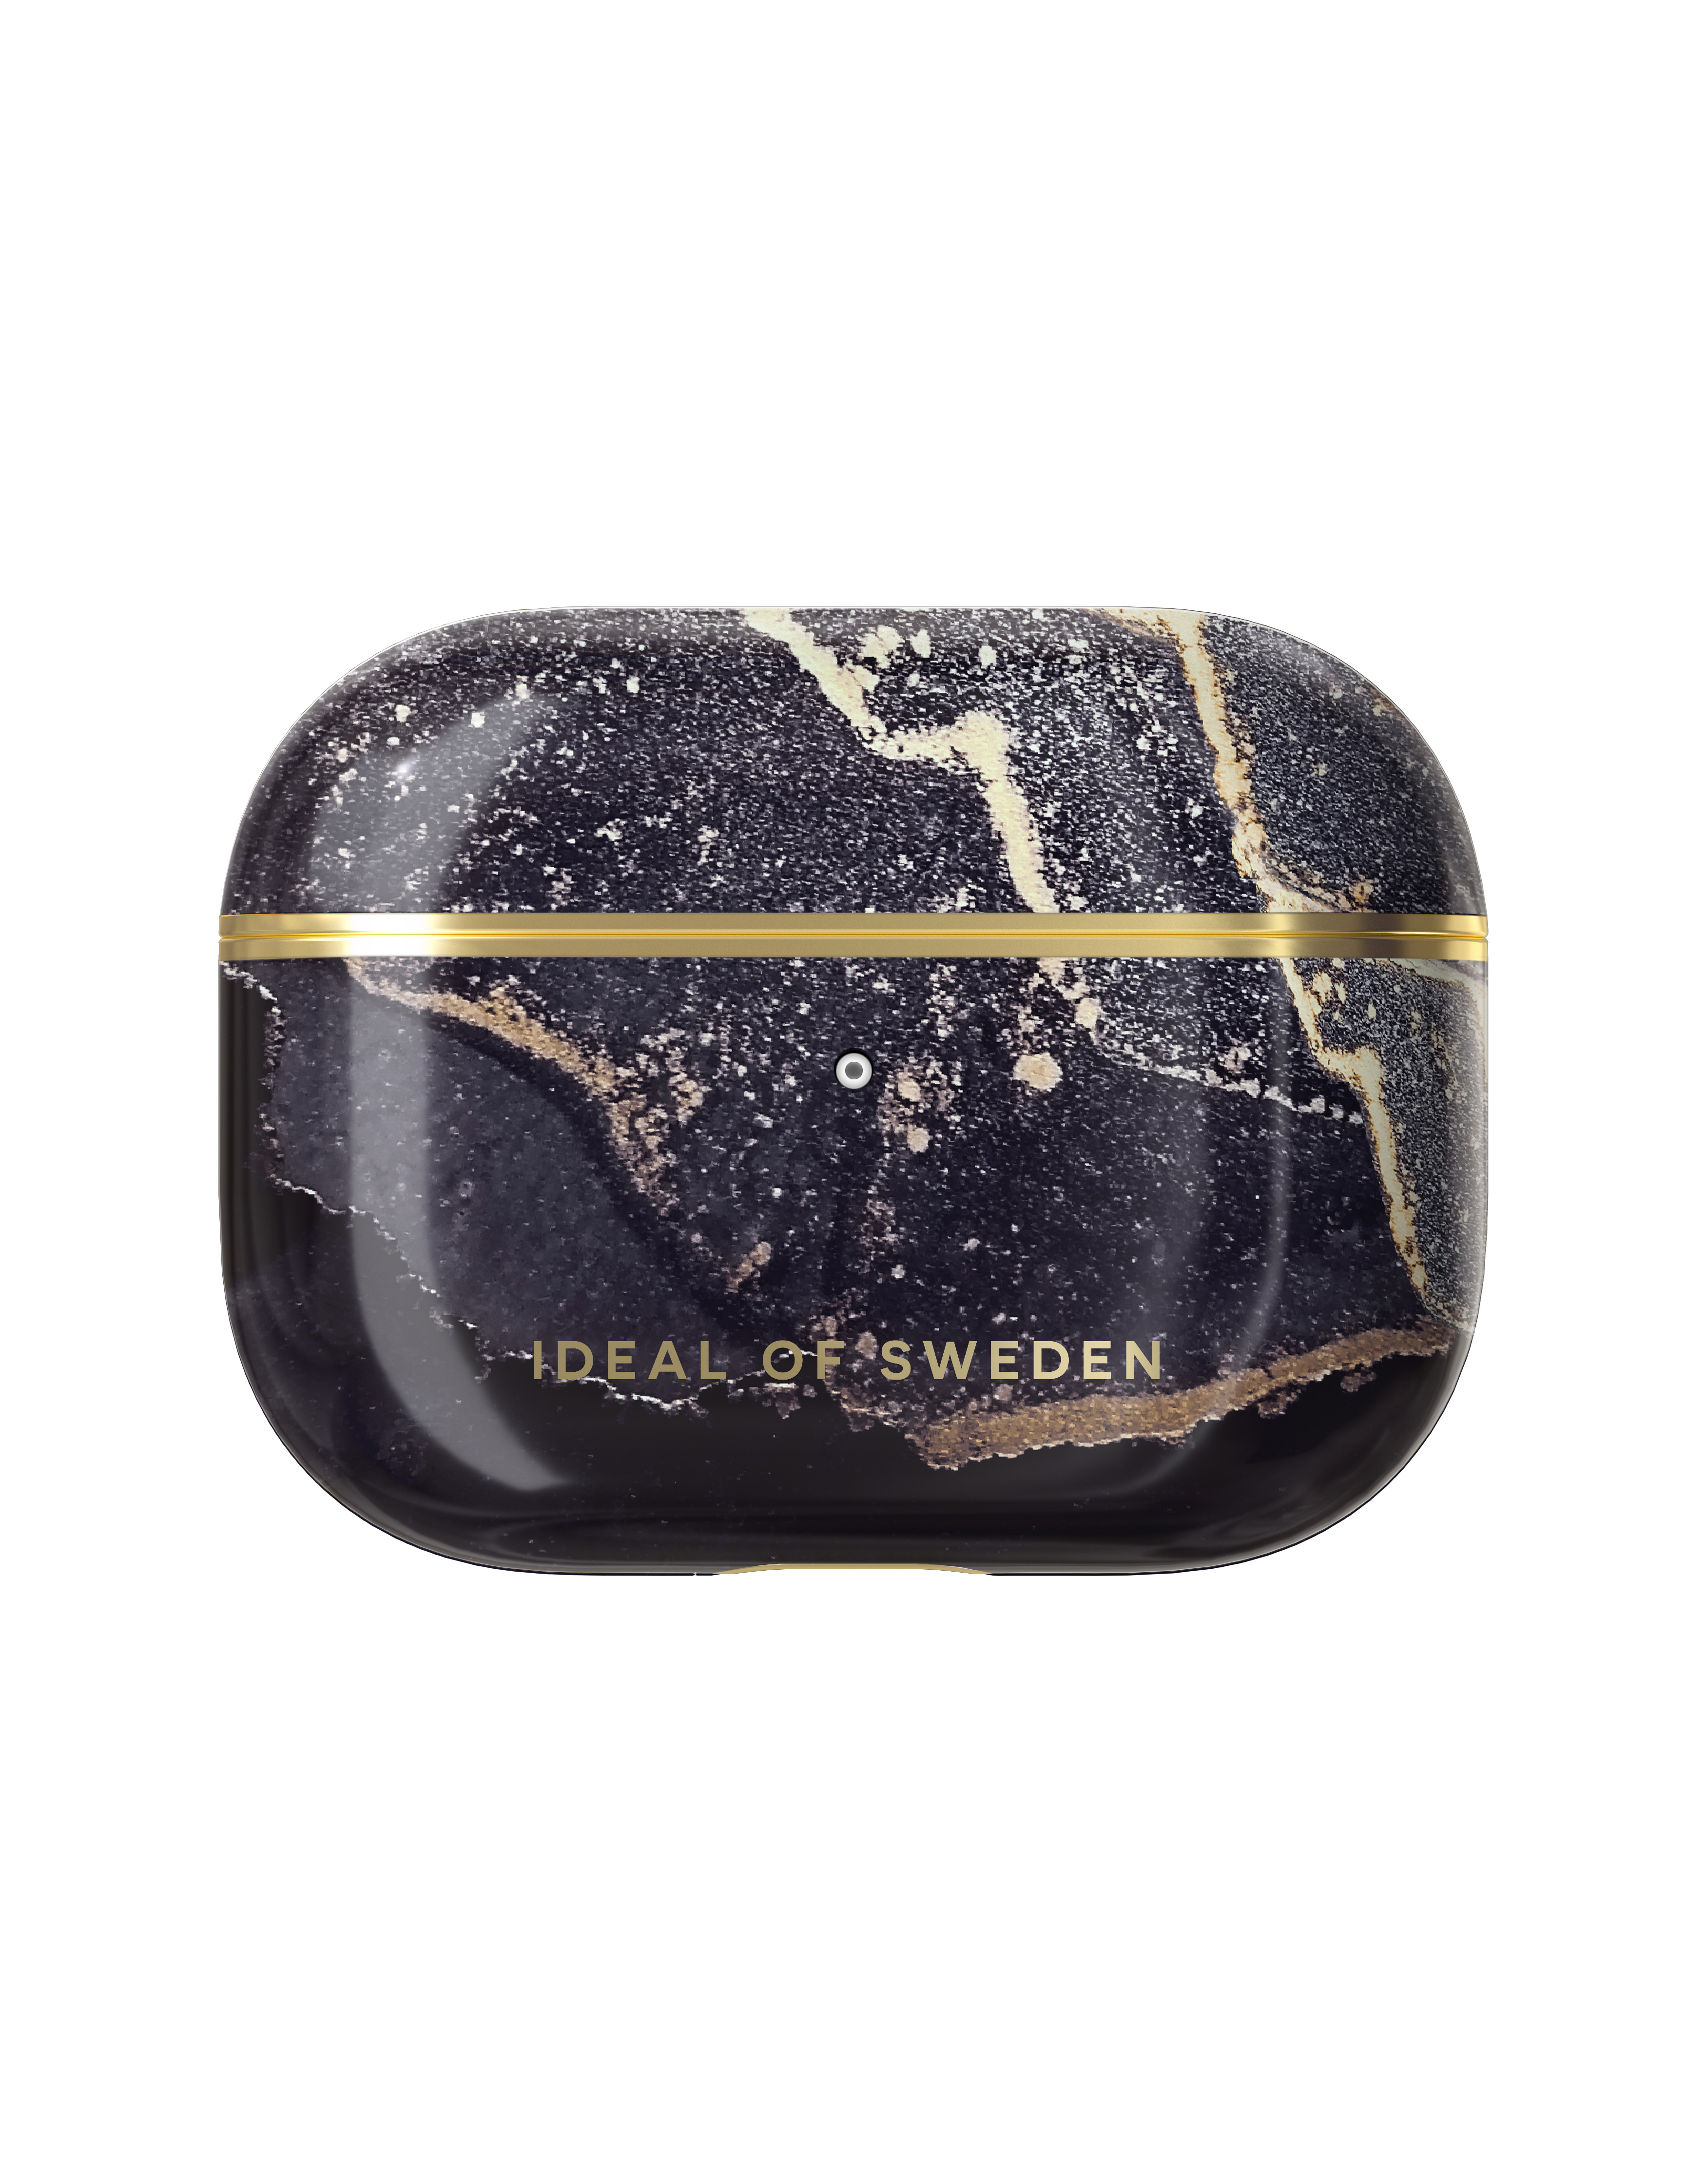 IDEAL OF SWEDEN IDFAPCAW21-PRO-321 Pro Twilight Golden Schutzhülle Airpods Case Marble